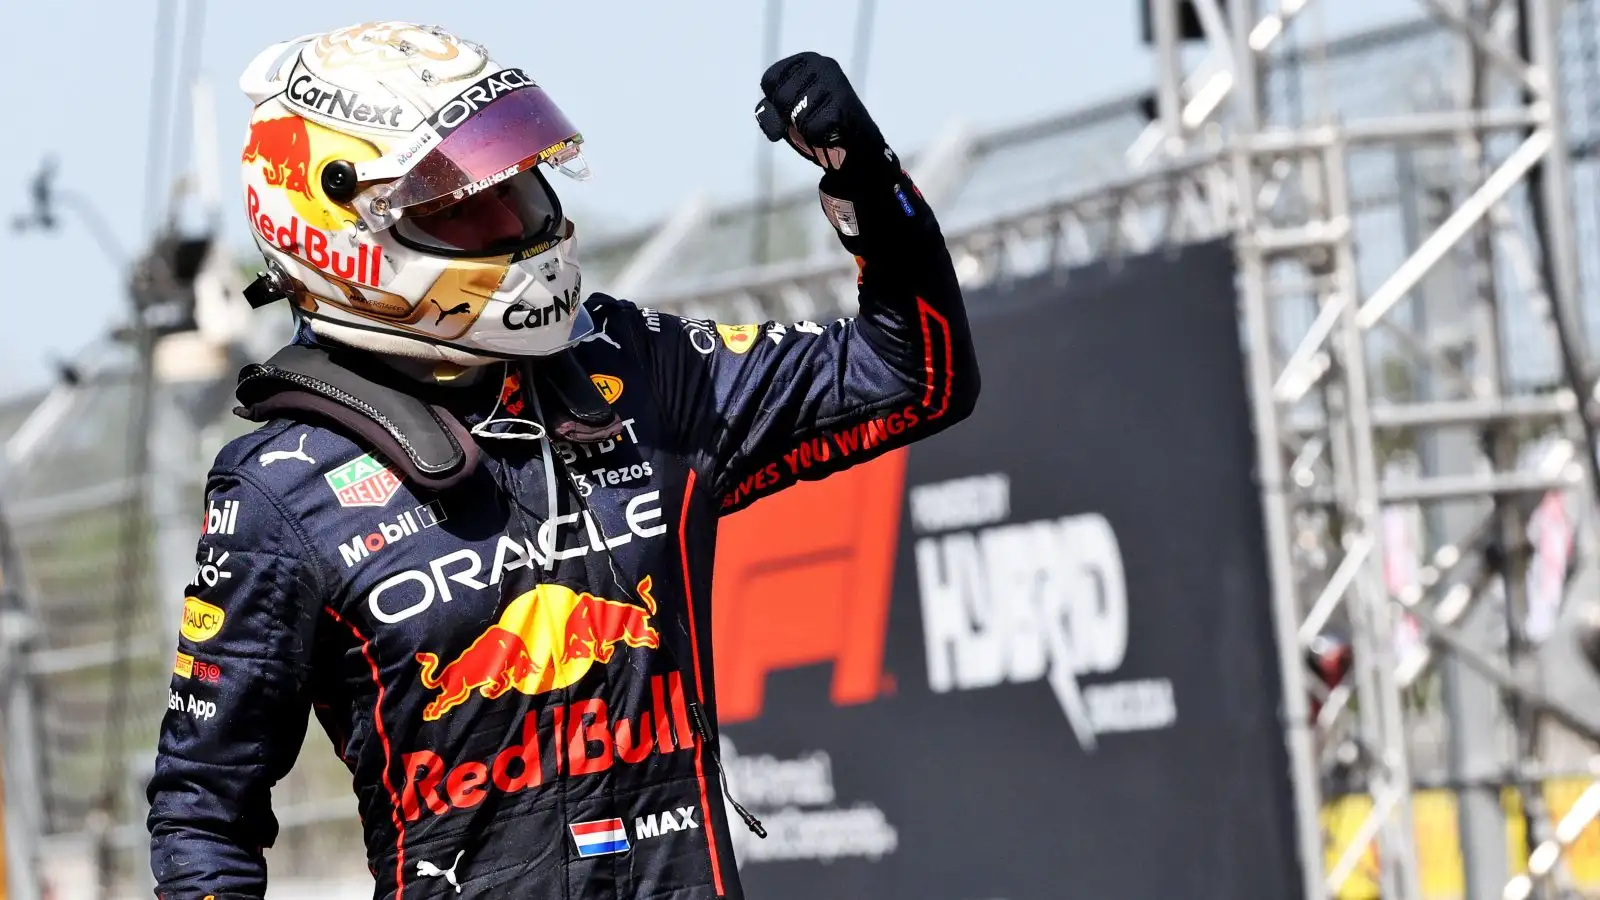 Max Verstappen raises his arm in celebration. Barcelona, May 2022.